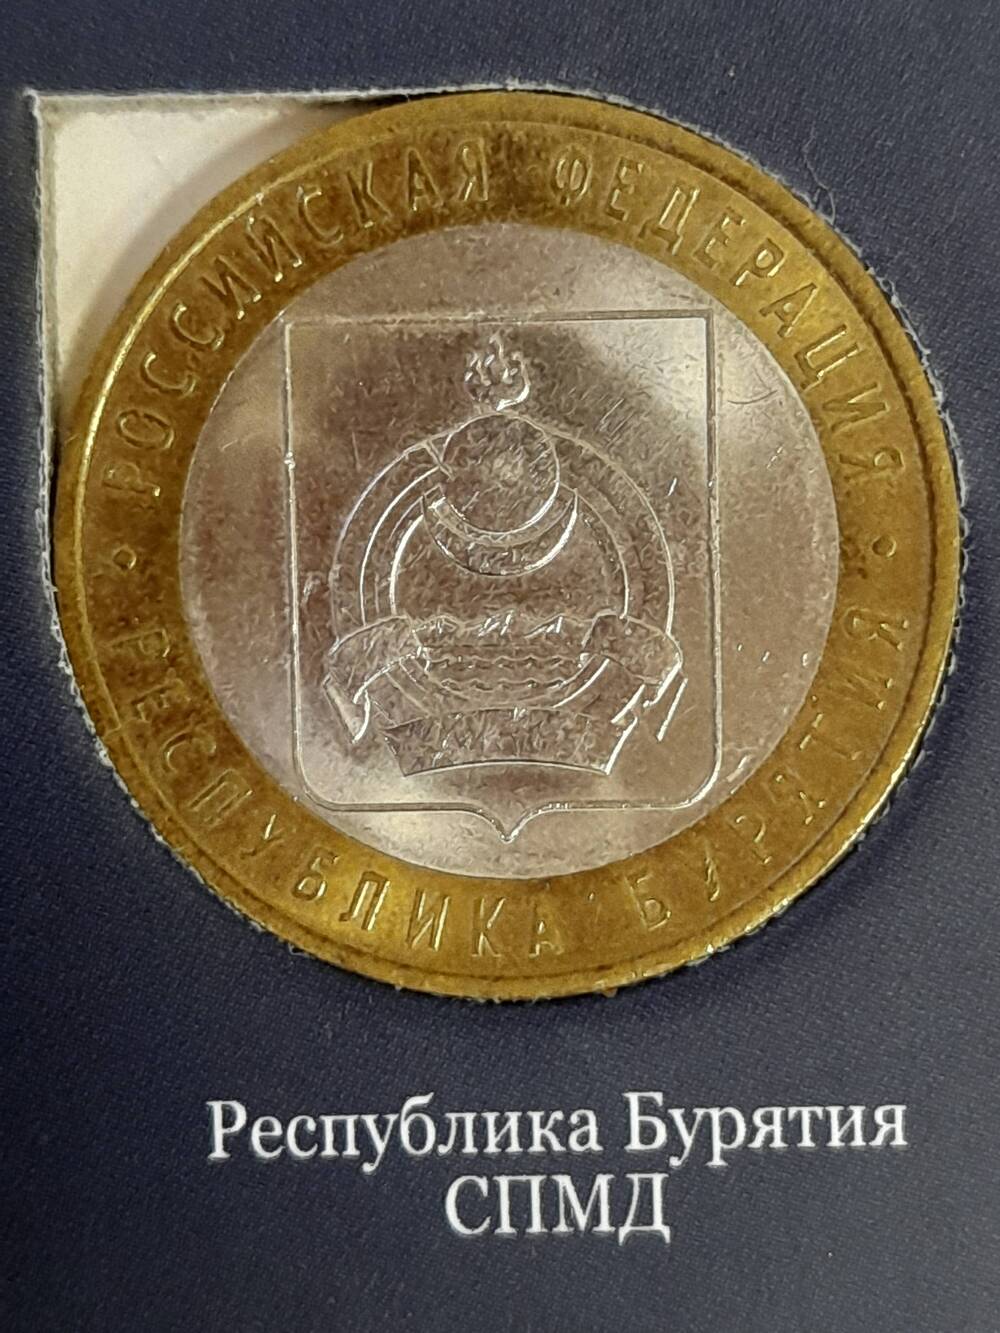 Монета памятная 10 РУБЛЕЙ. Республика Бурятия 2011 г. Россия